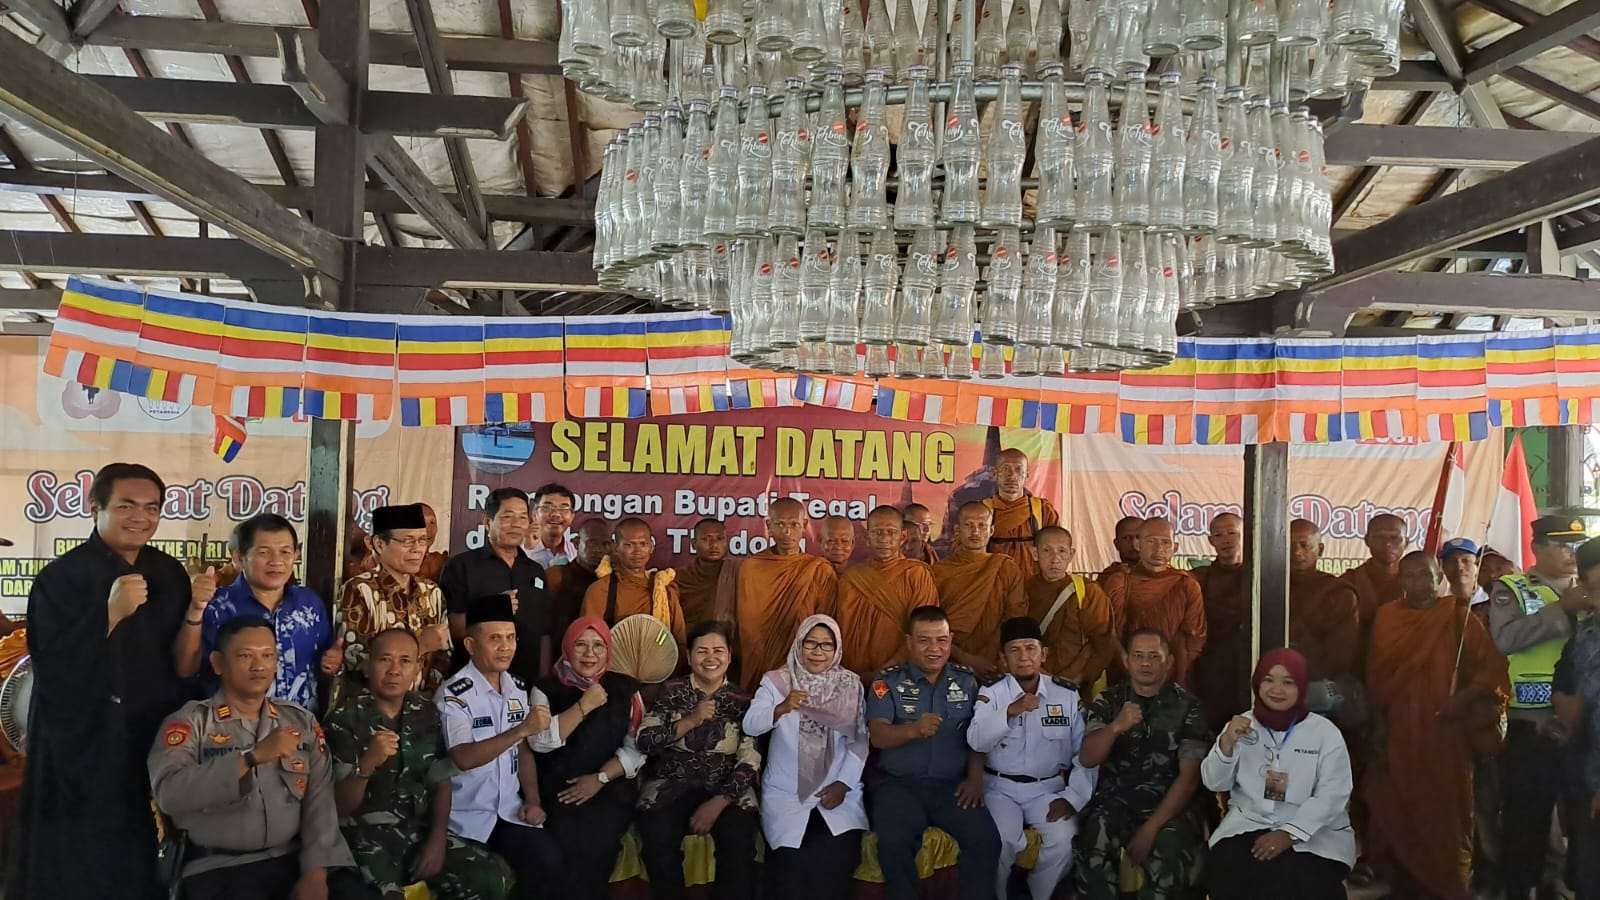 Biksu Thailand Disambut Hadroh, Netizen Terbelah: Kayane Wis Berlebihan